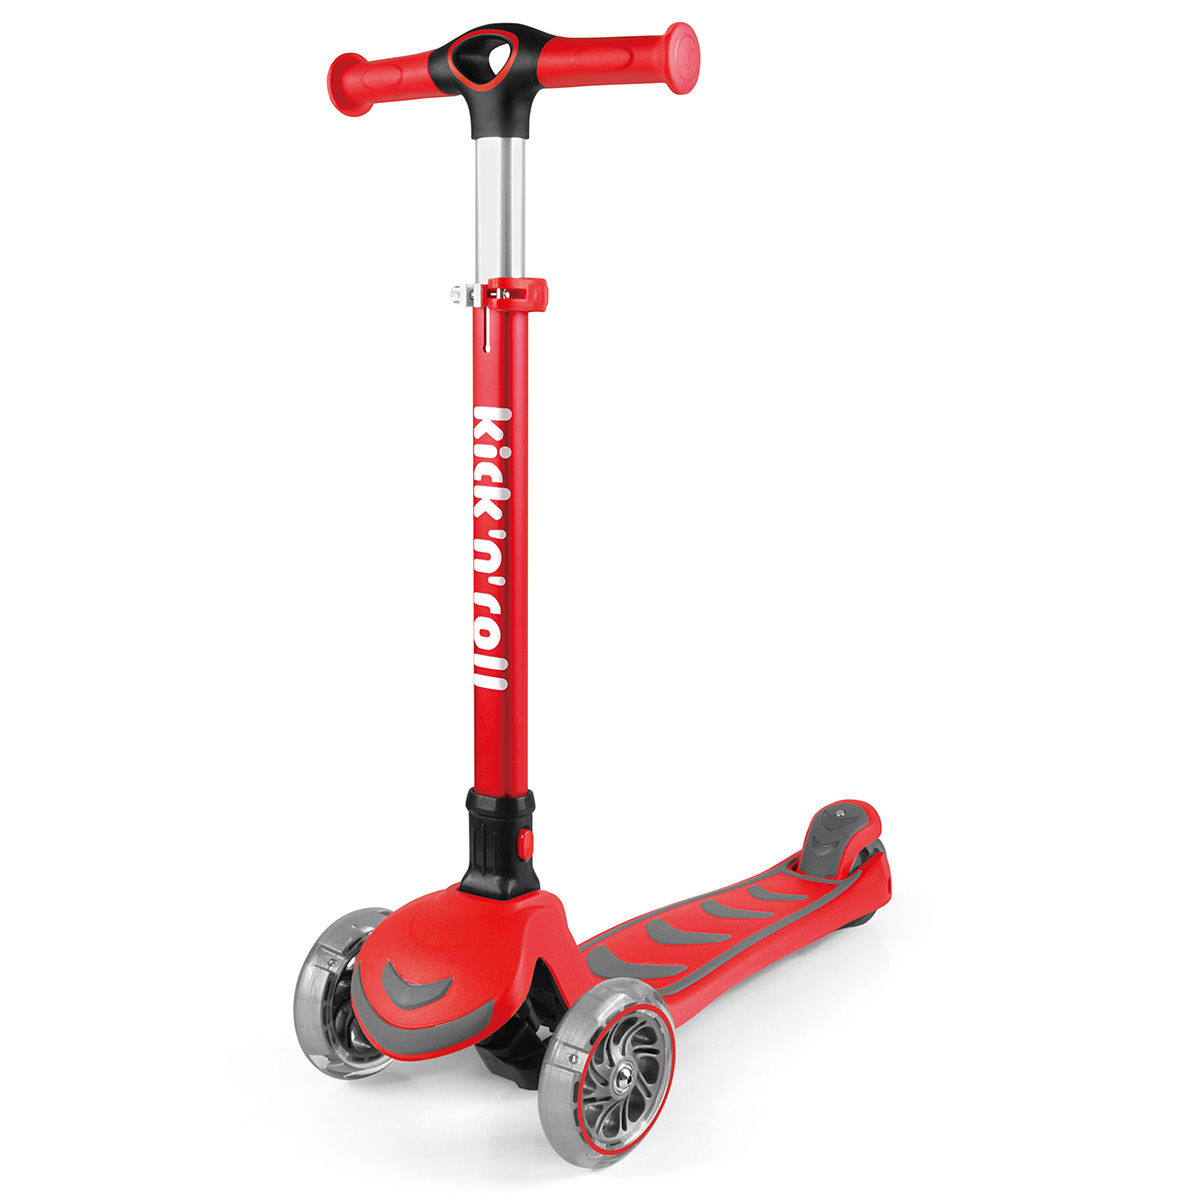 Gevoelig voor neef verstoring Kick n Roll Scooter - Opvouwbare aluminium step met LED wielen - Rood |  Baby & Koter